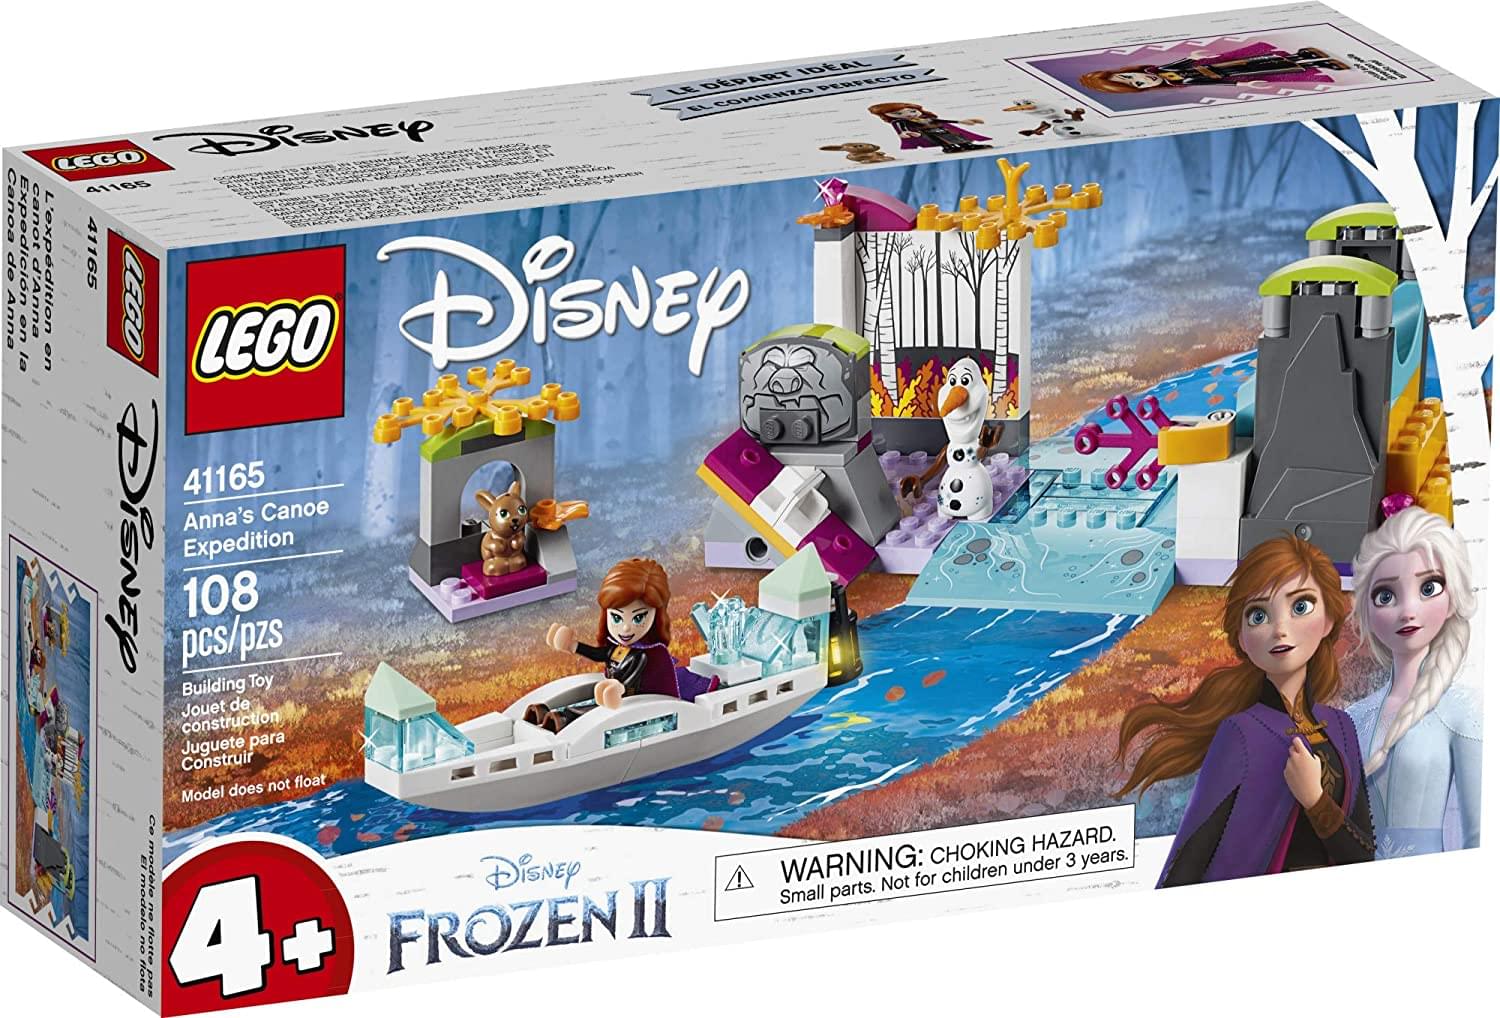 LEGO Disney Frozen II 41165 Anna's Canoe Expedition 108 Piece Building Kit